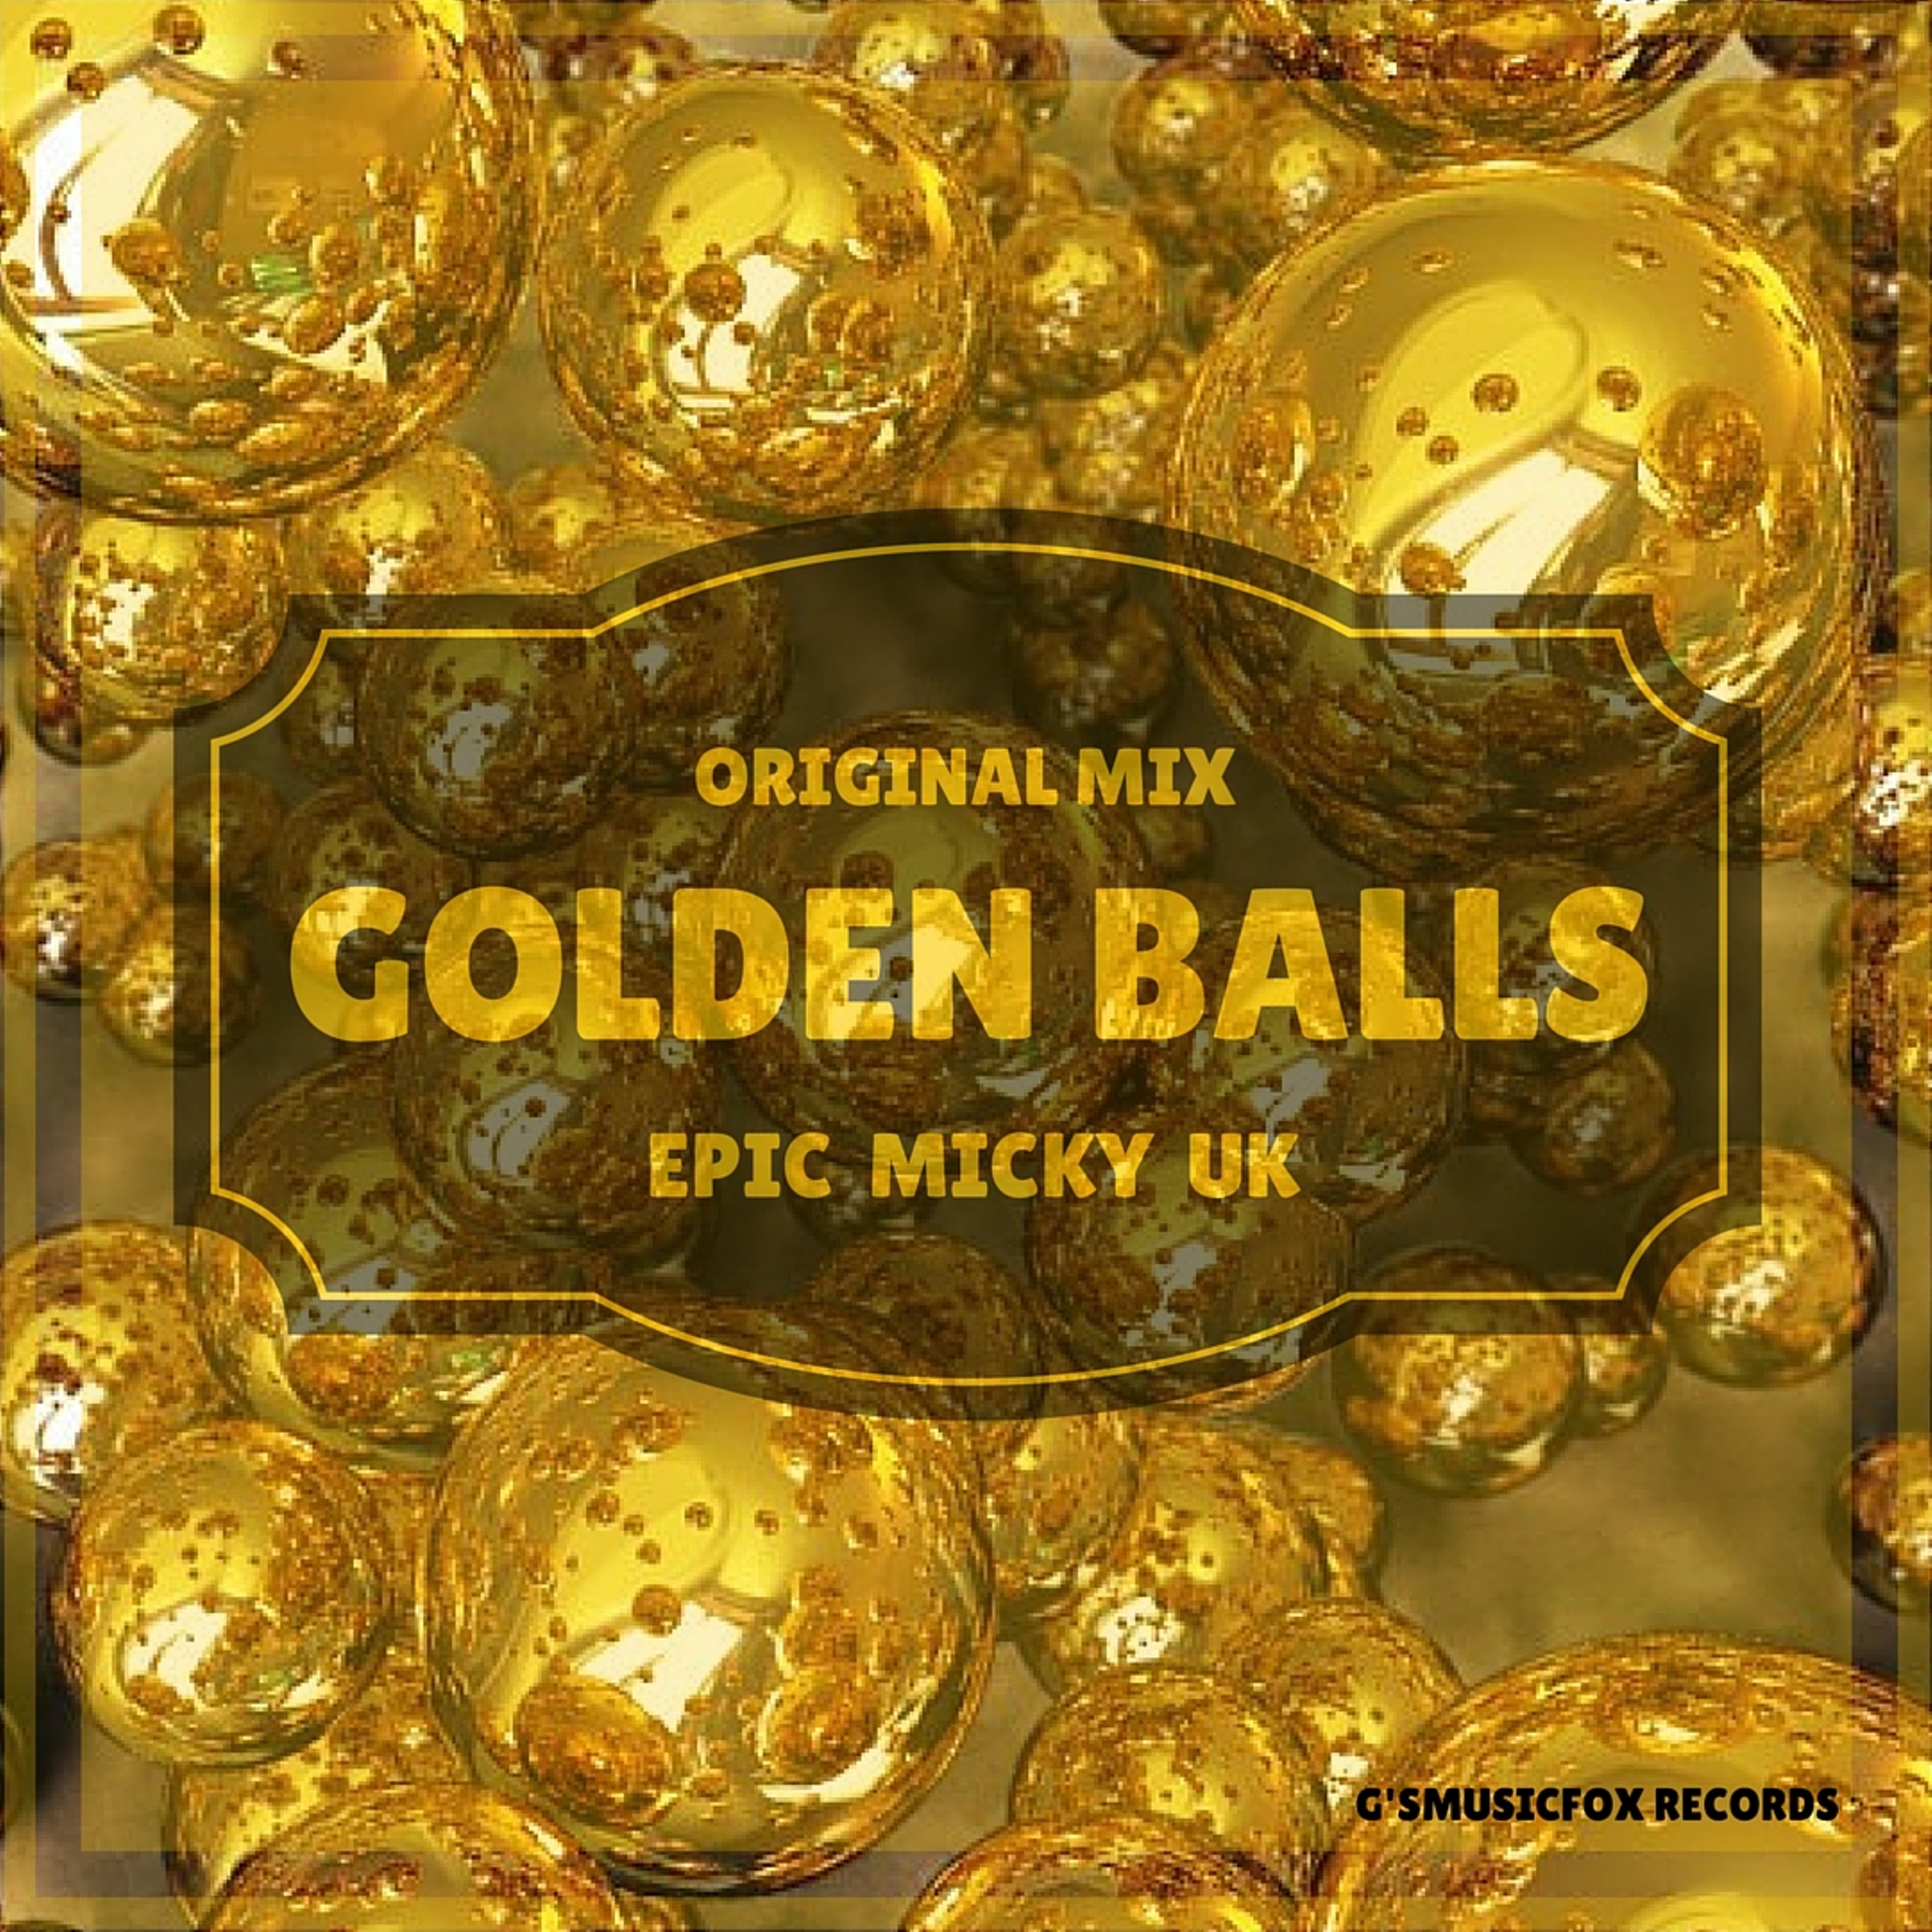 Голден бол. Golden Mix Original. Репа Голден Болл. Оригинал песни balling. Original balling